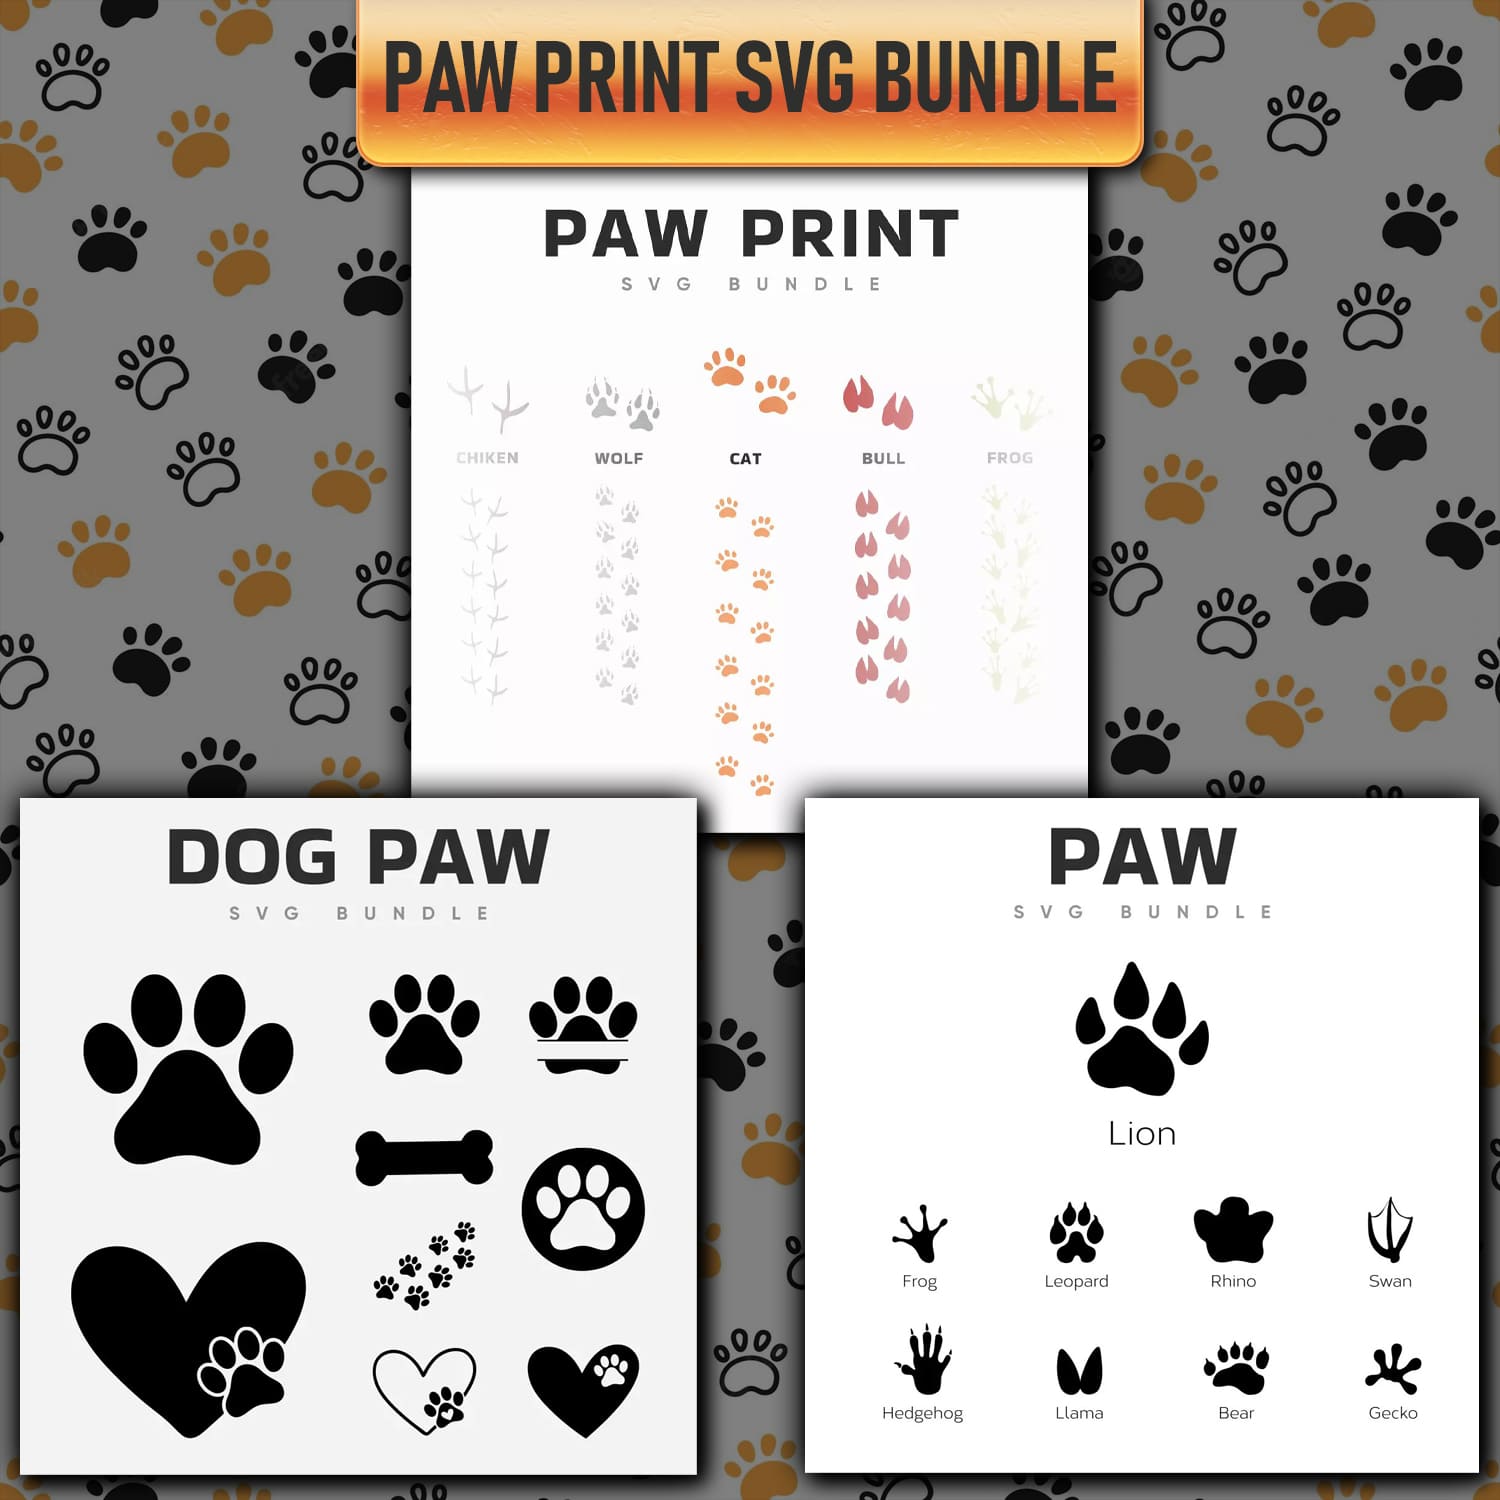 Giant Paw Print SVG Bundle